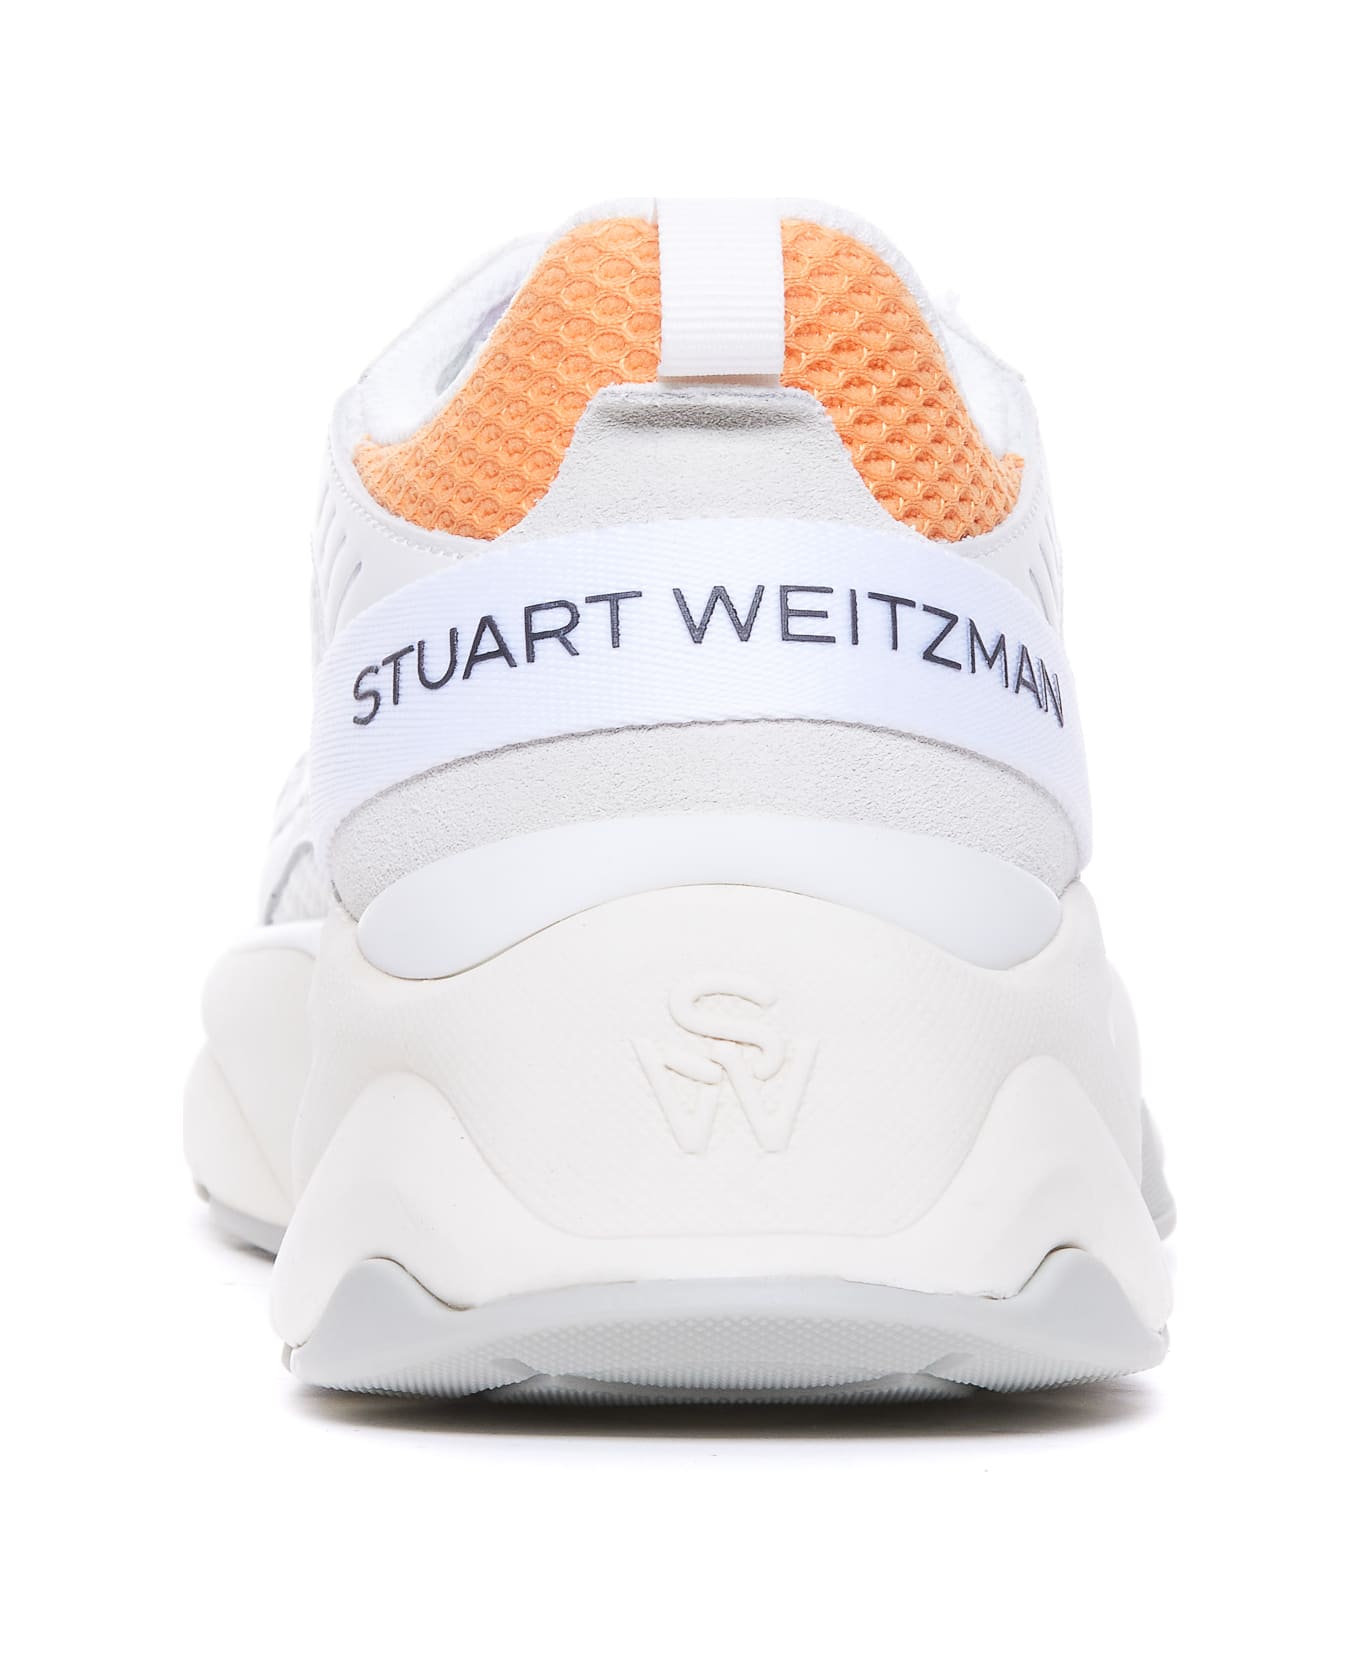 Stuart Weitzman Sw Trainer Sneakers - White